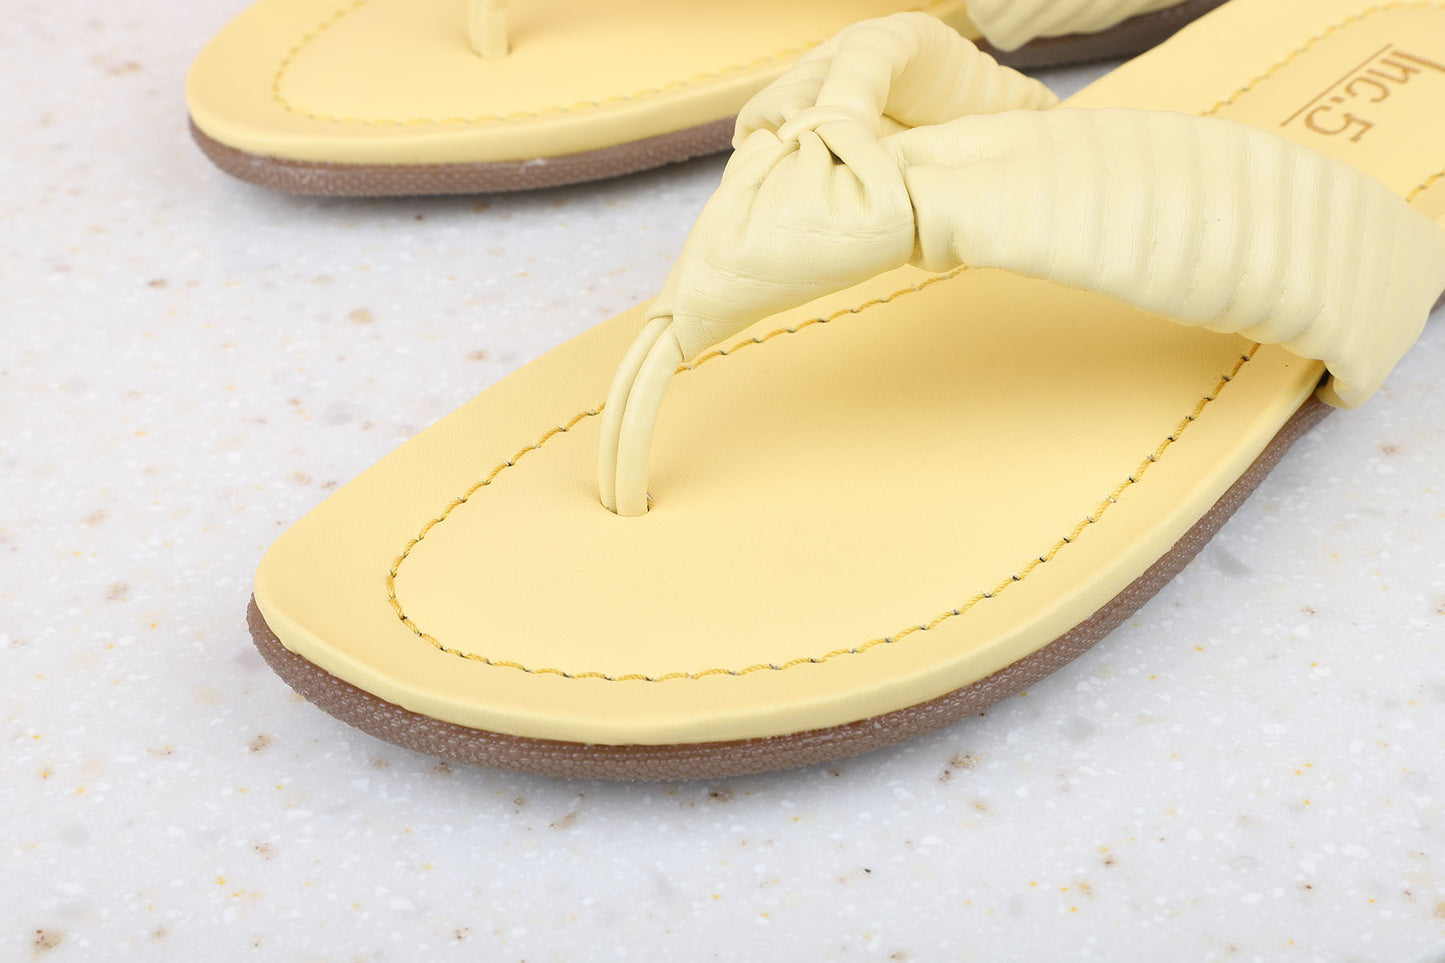 Women Yellow Textured Open Toe Flats